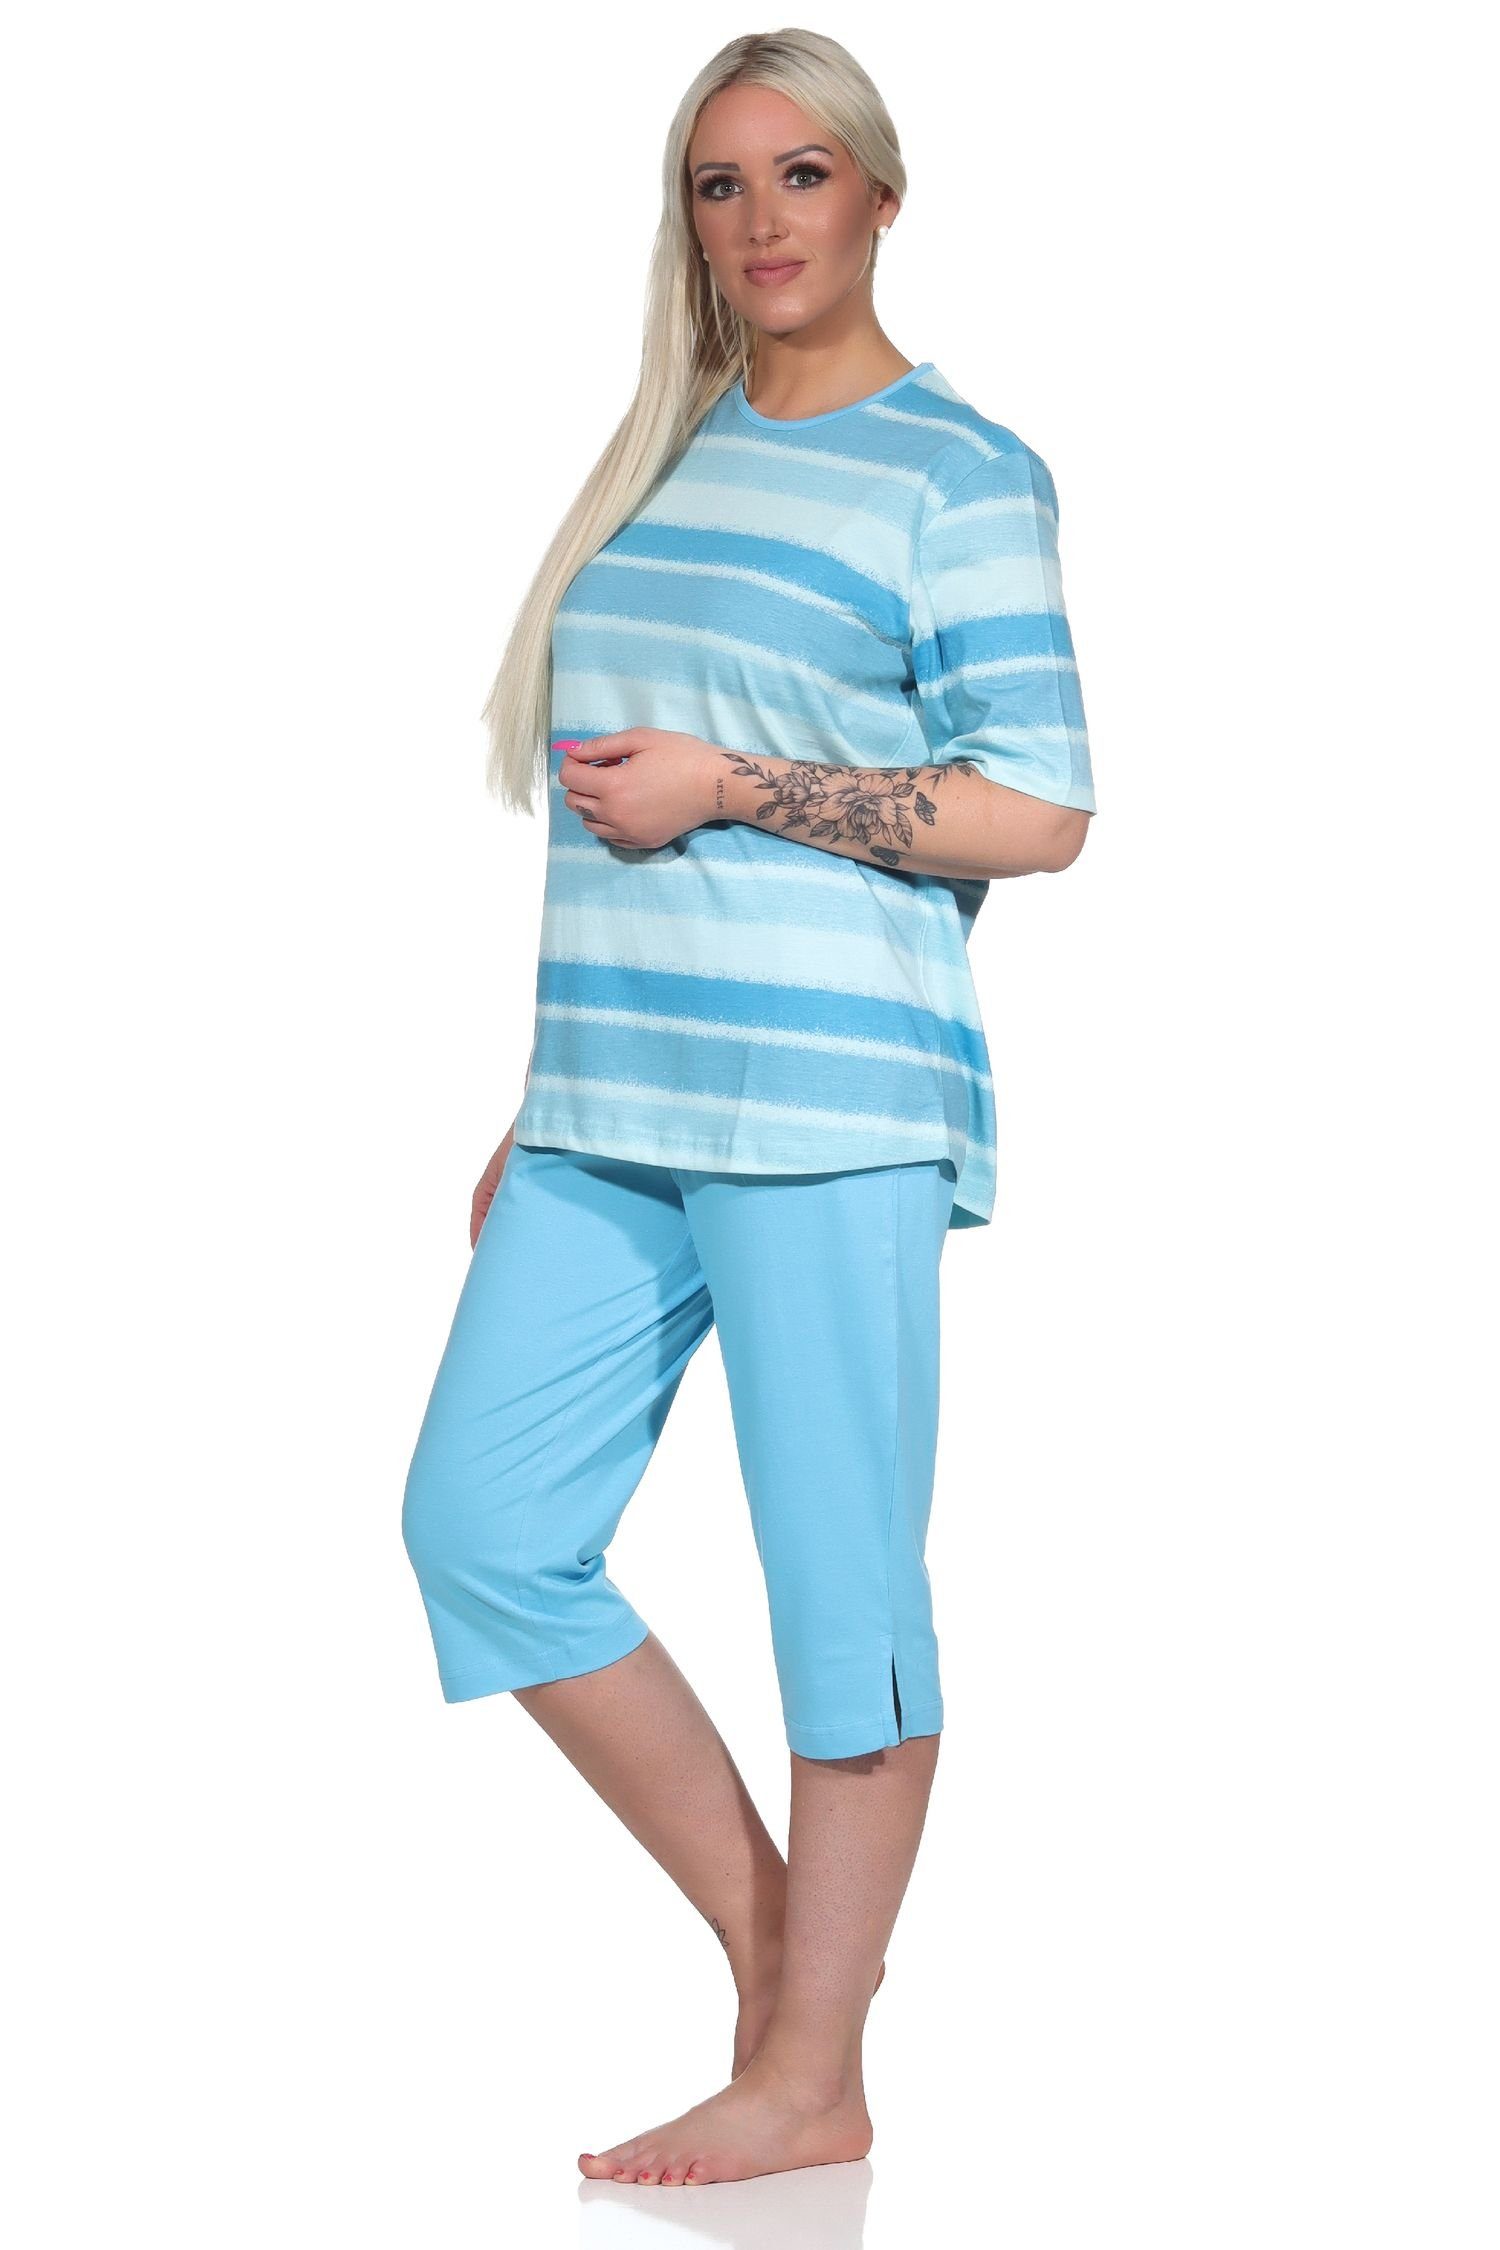 Normann Pyjama Damen Capri Streifen blau farbenfrohen Schlafanzug im kurzarm Pyjama Look